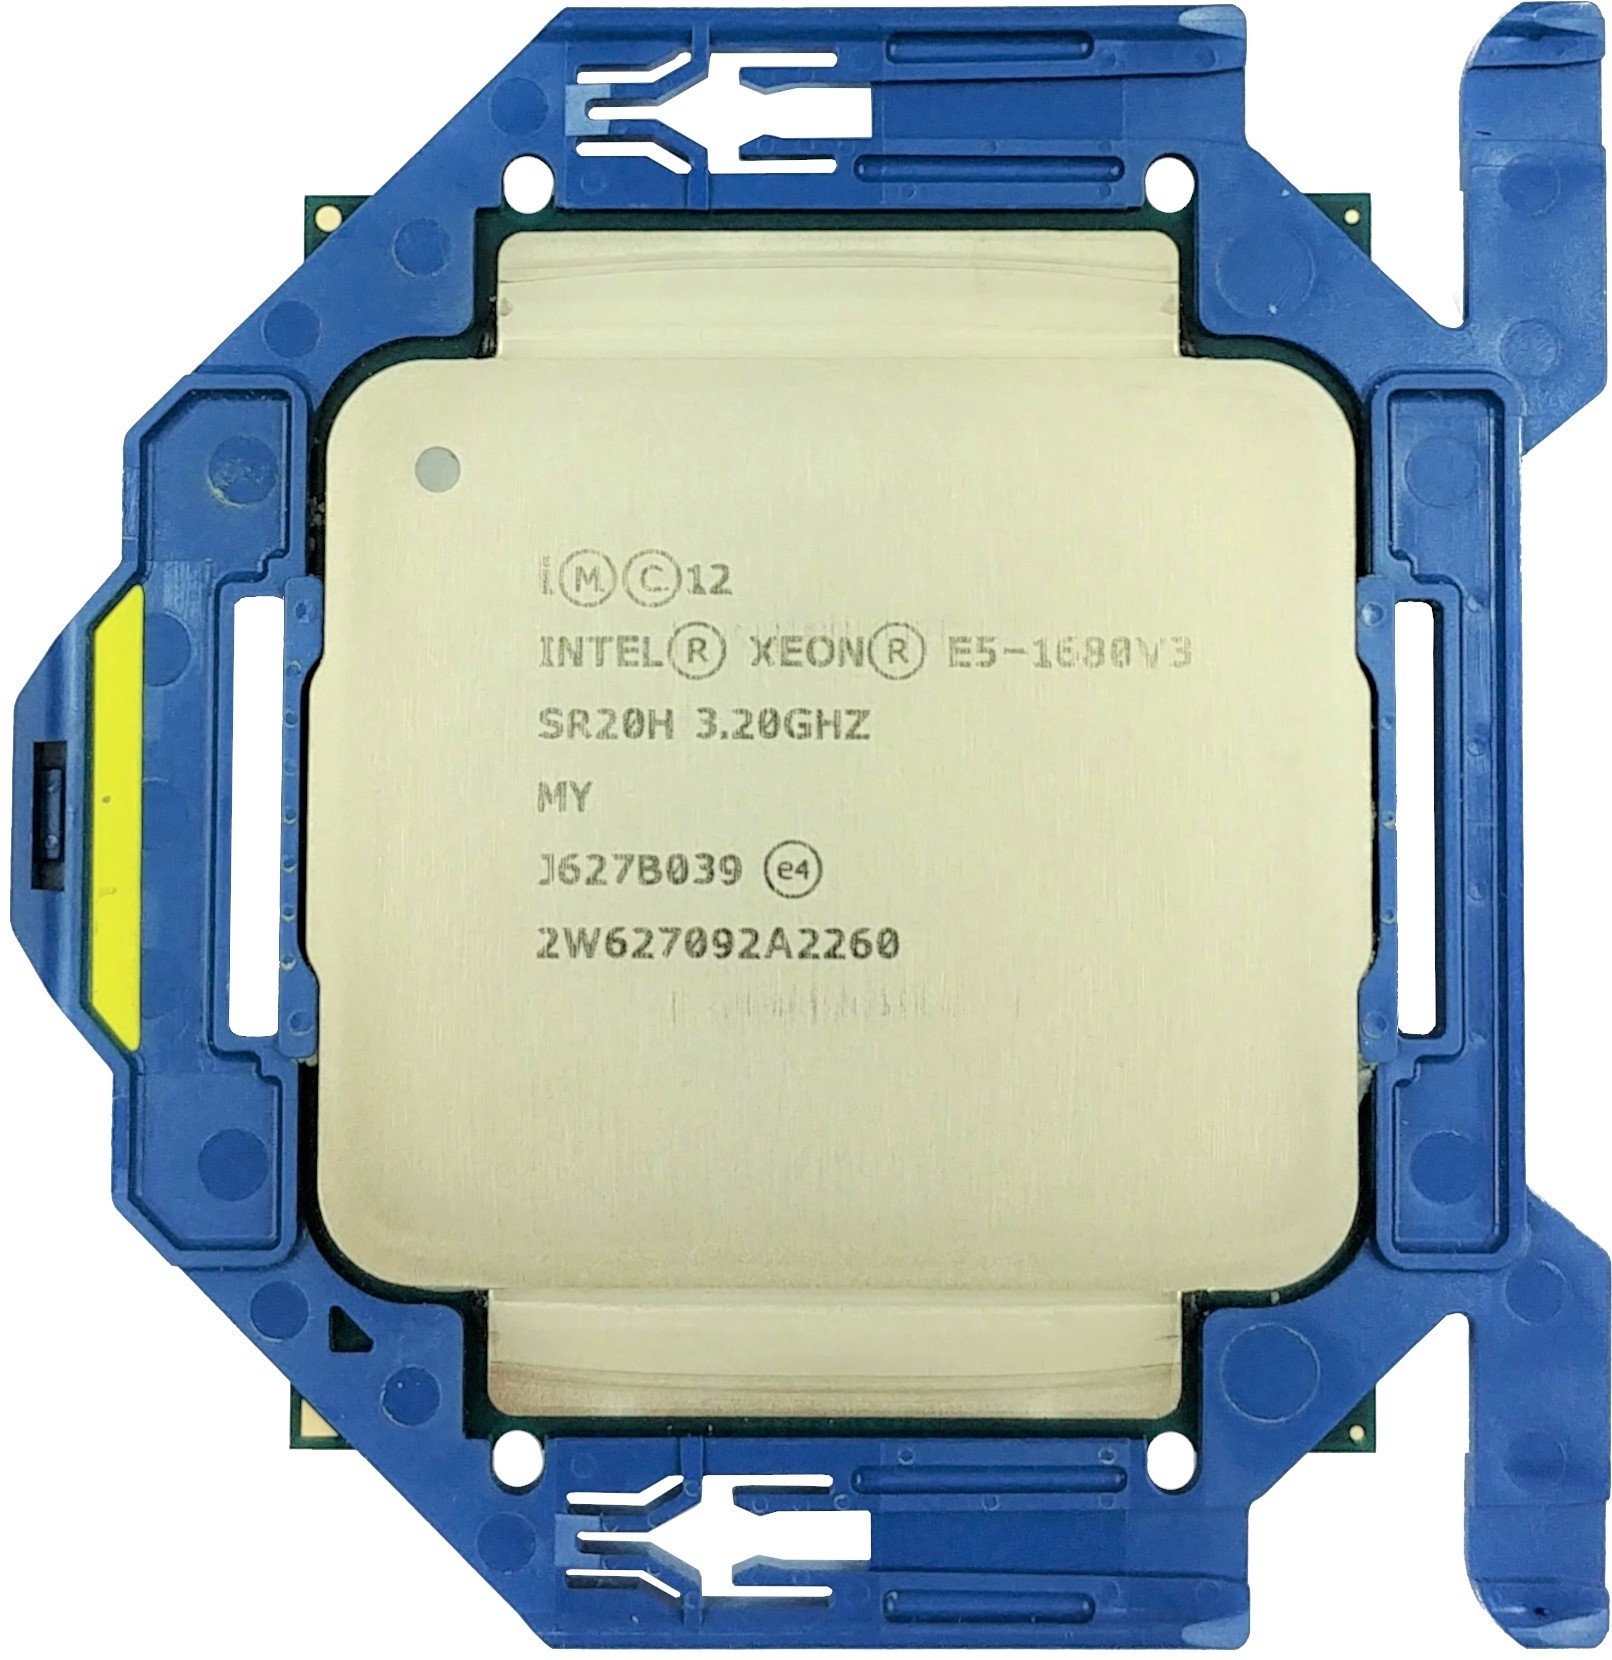 Intel Xeon E5-1680 V3 (SR20H) 3.20Ghz Octa (8) Core LGA2011-3 140W CPU